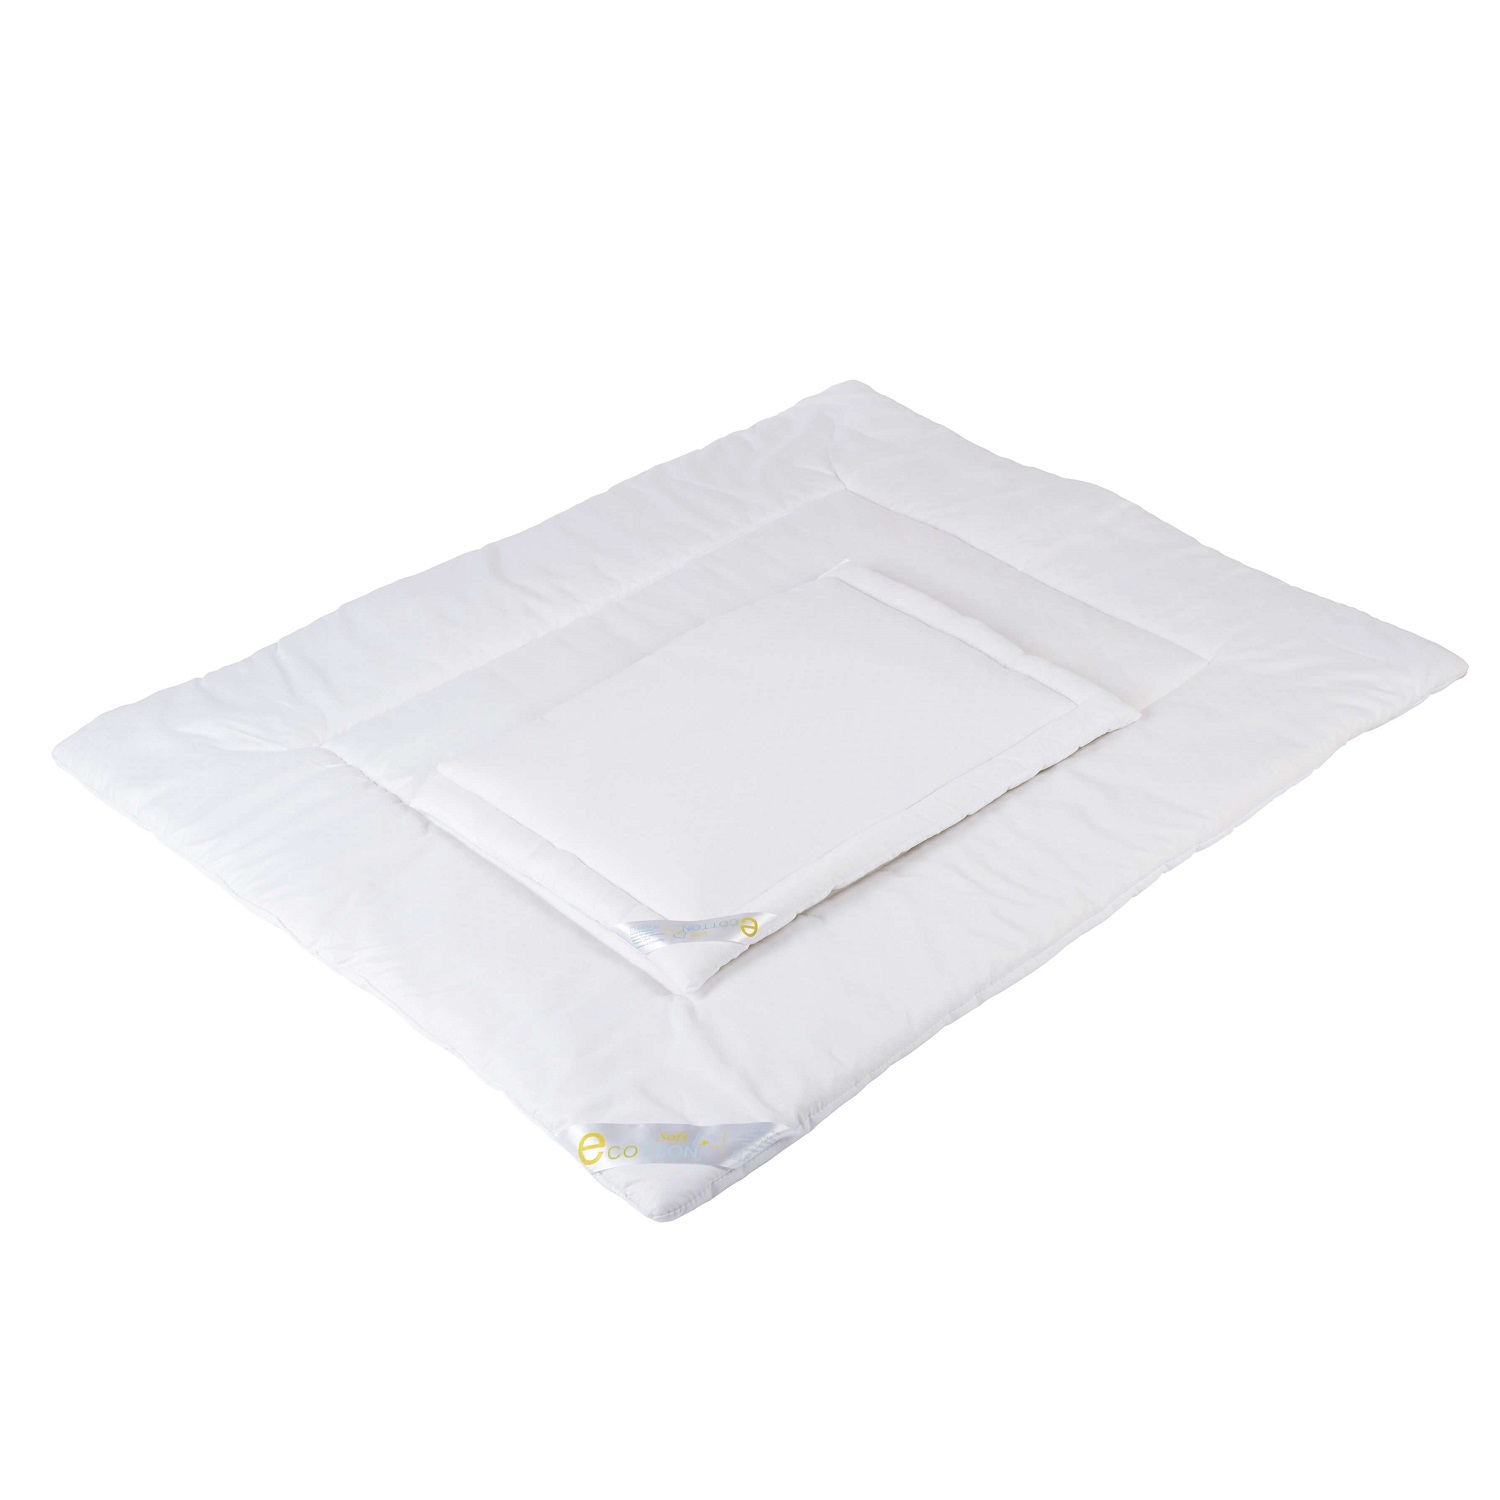 2-piece quilt set pillow + duvet suitable for allergy sufferers